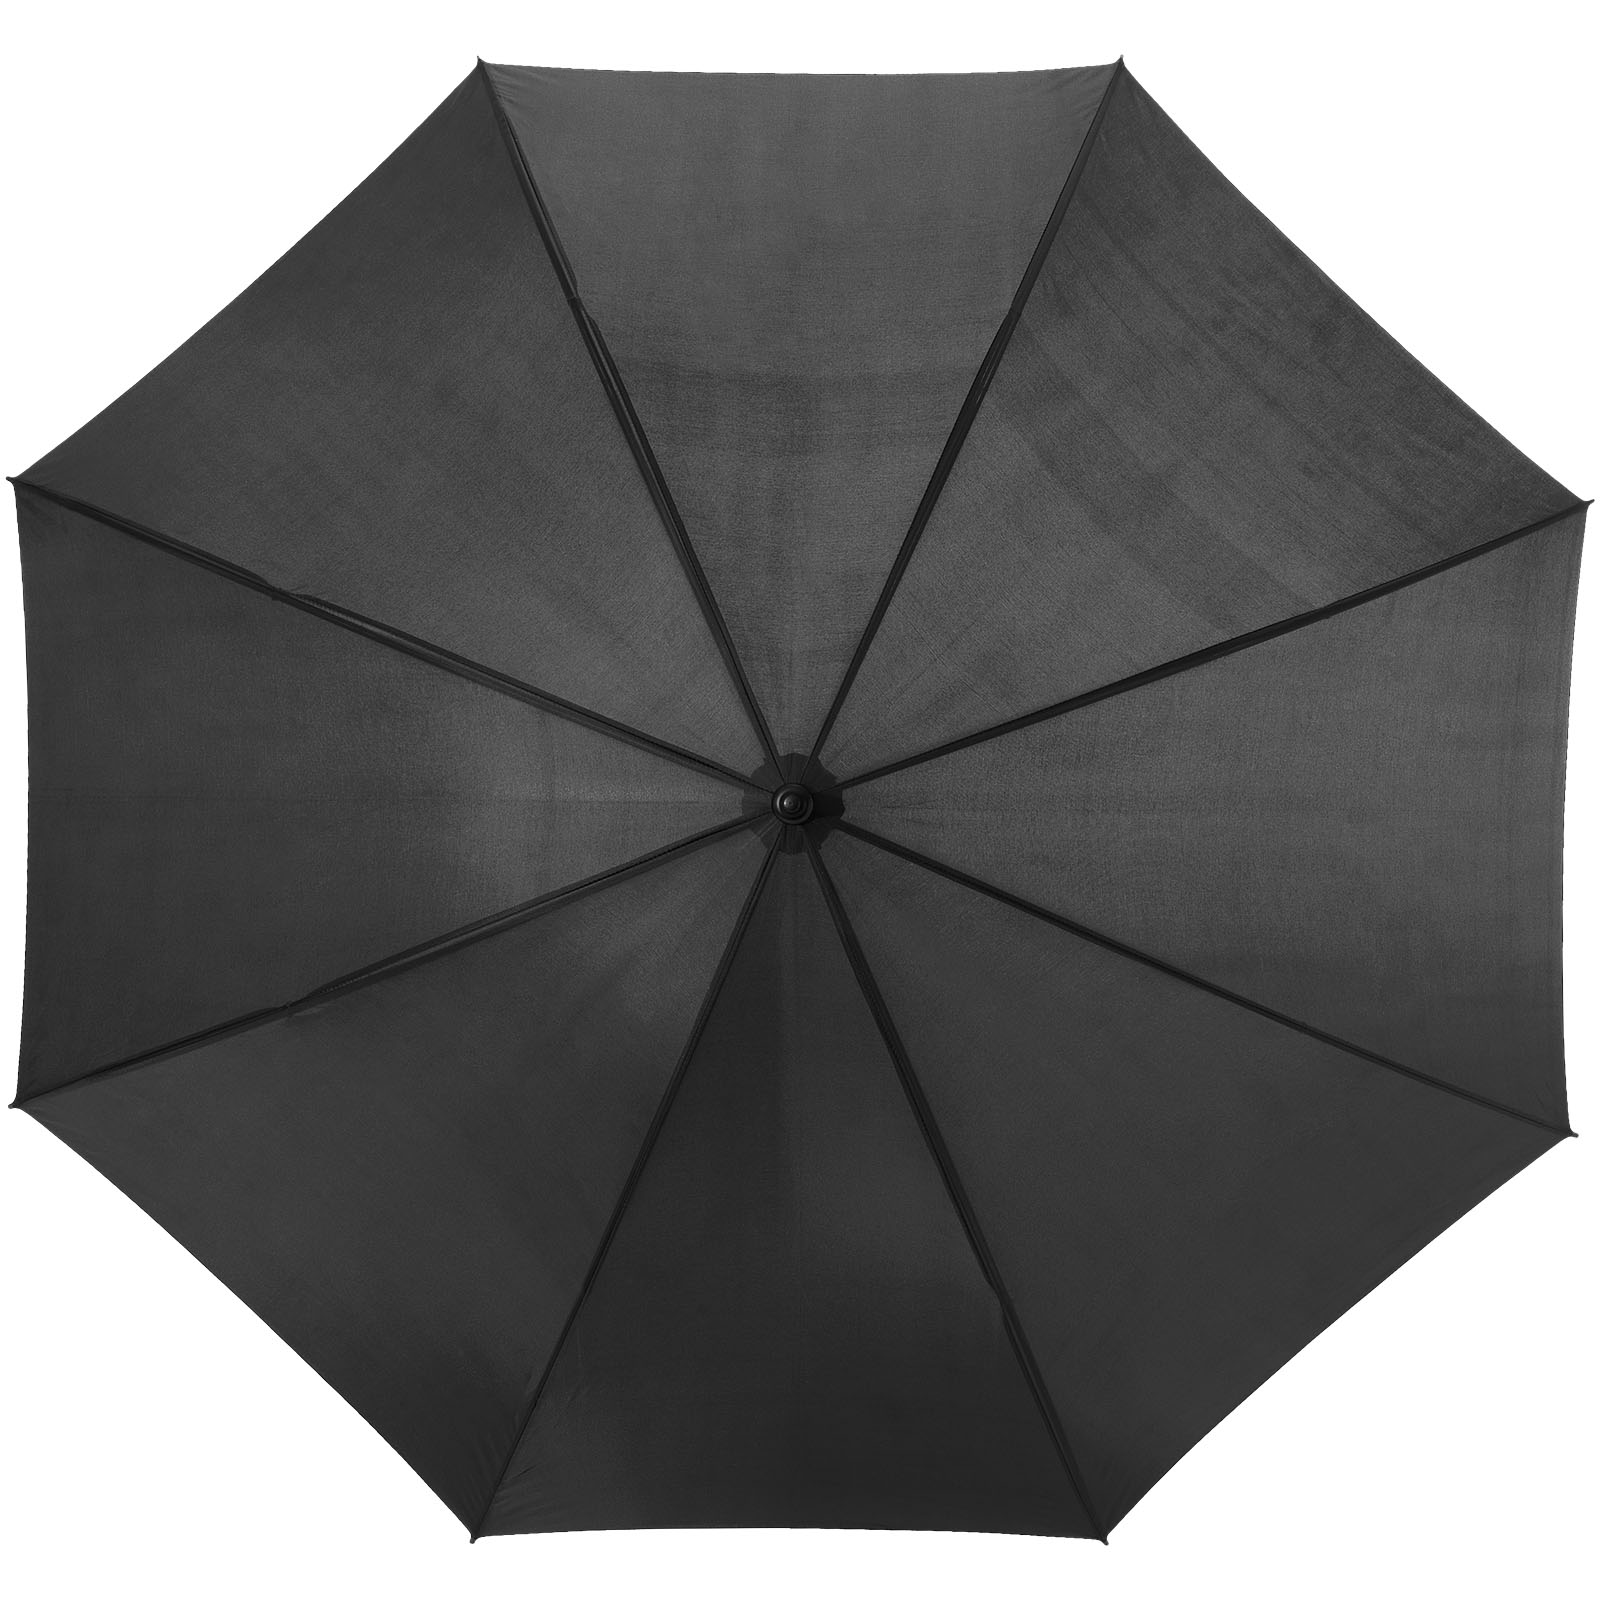 Advertising Standard Umbrellas - Barry 23